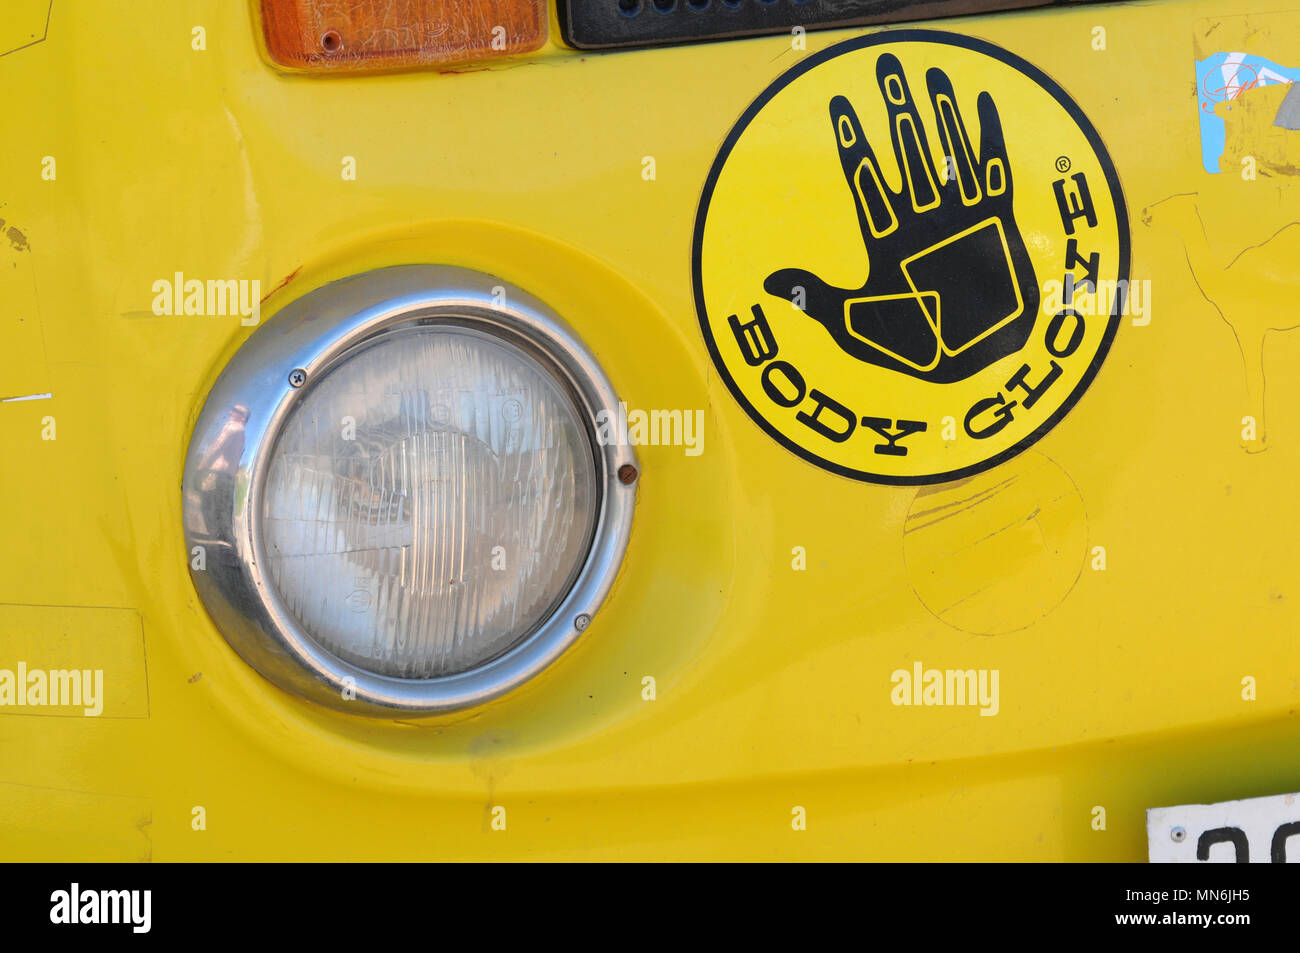 VW camper van with body glove surf sticker on it Stock Photo